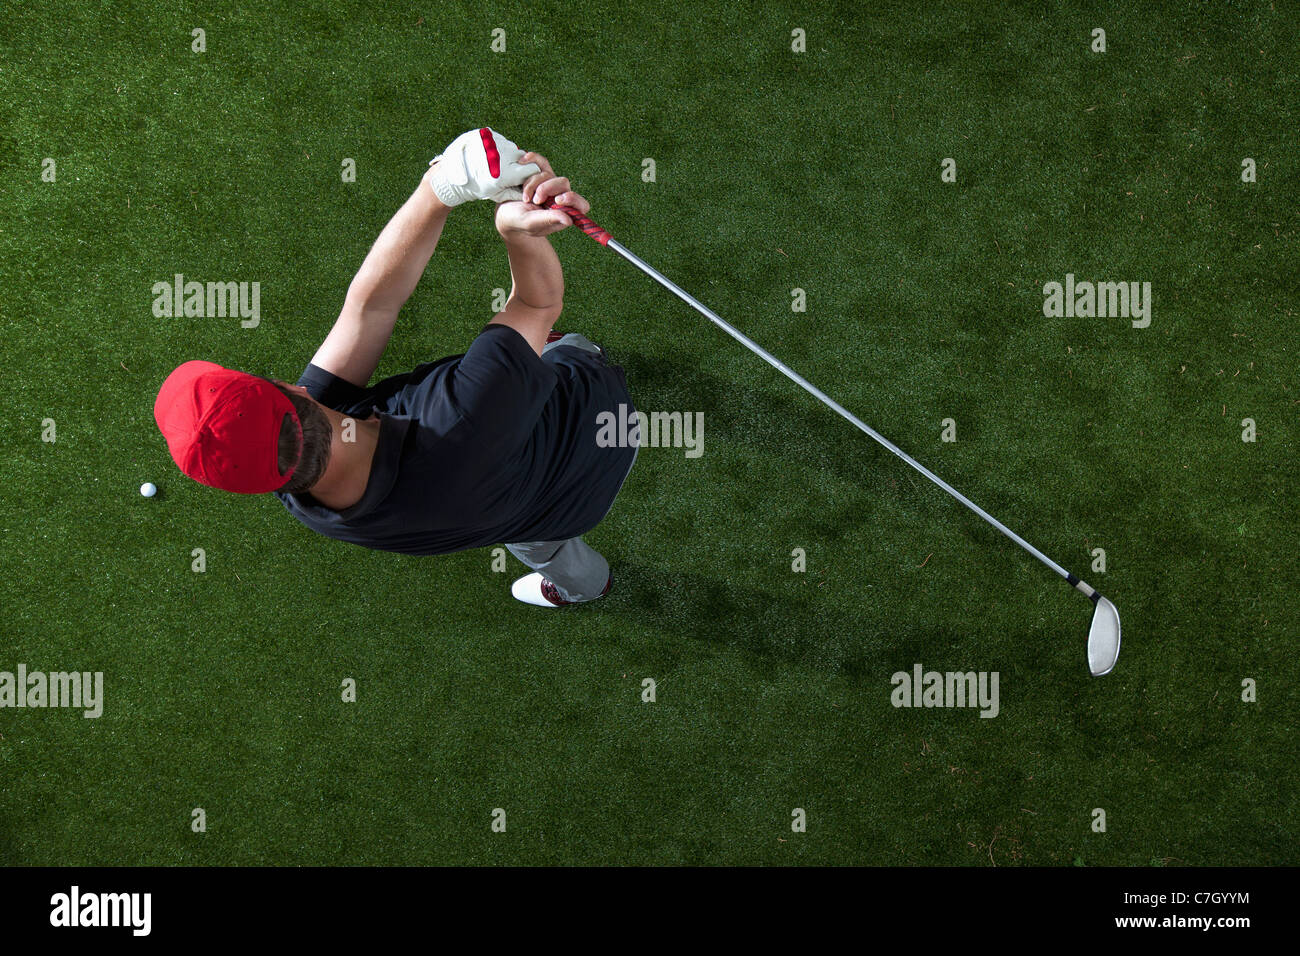 A golfer swinging a golf club, overhead view Stock Photo - Alamy